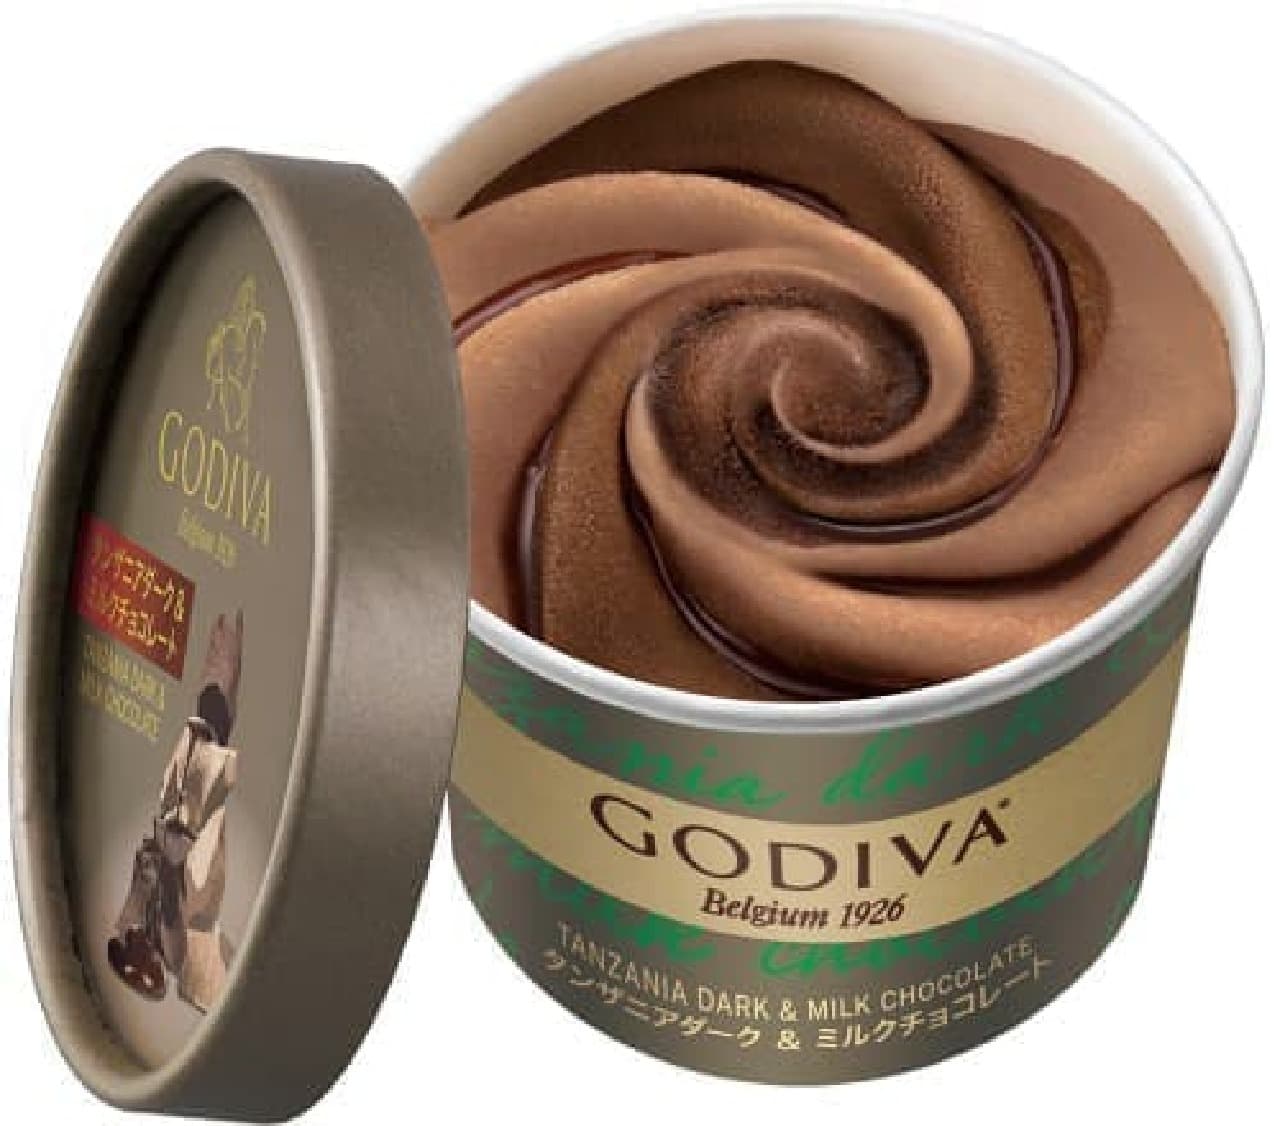 Godiva's Cup Ice "Tanzania Dark & Milk Chocolate"